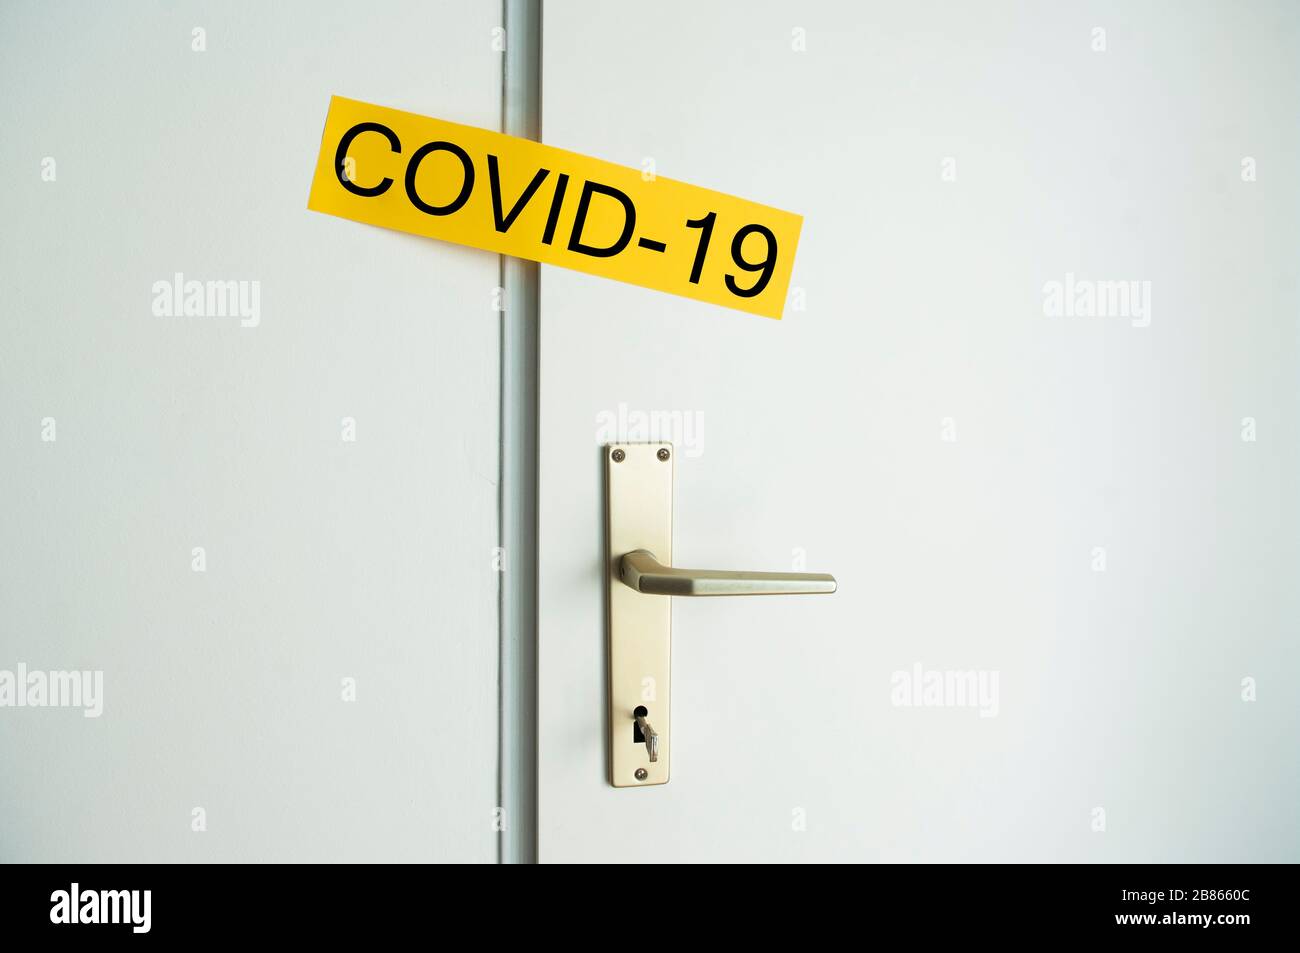 Coronavirus covid-19 quarantine, locked door, closed room, stay at home, protect health. Stock Photo